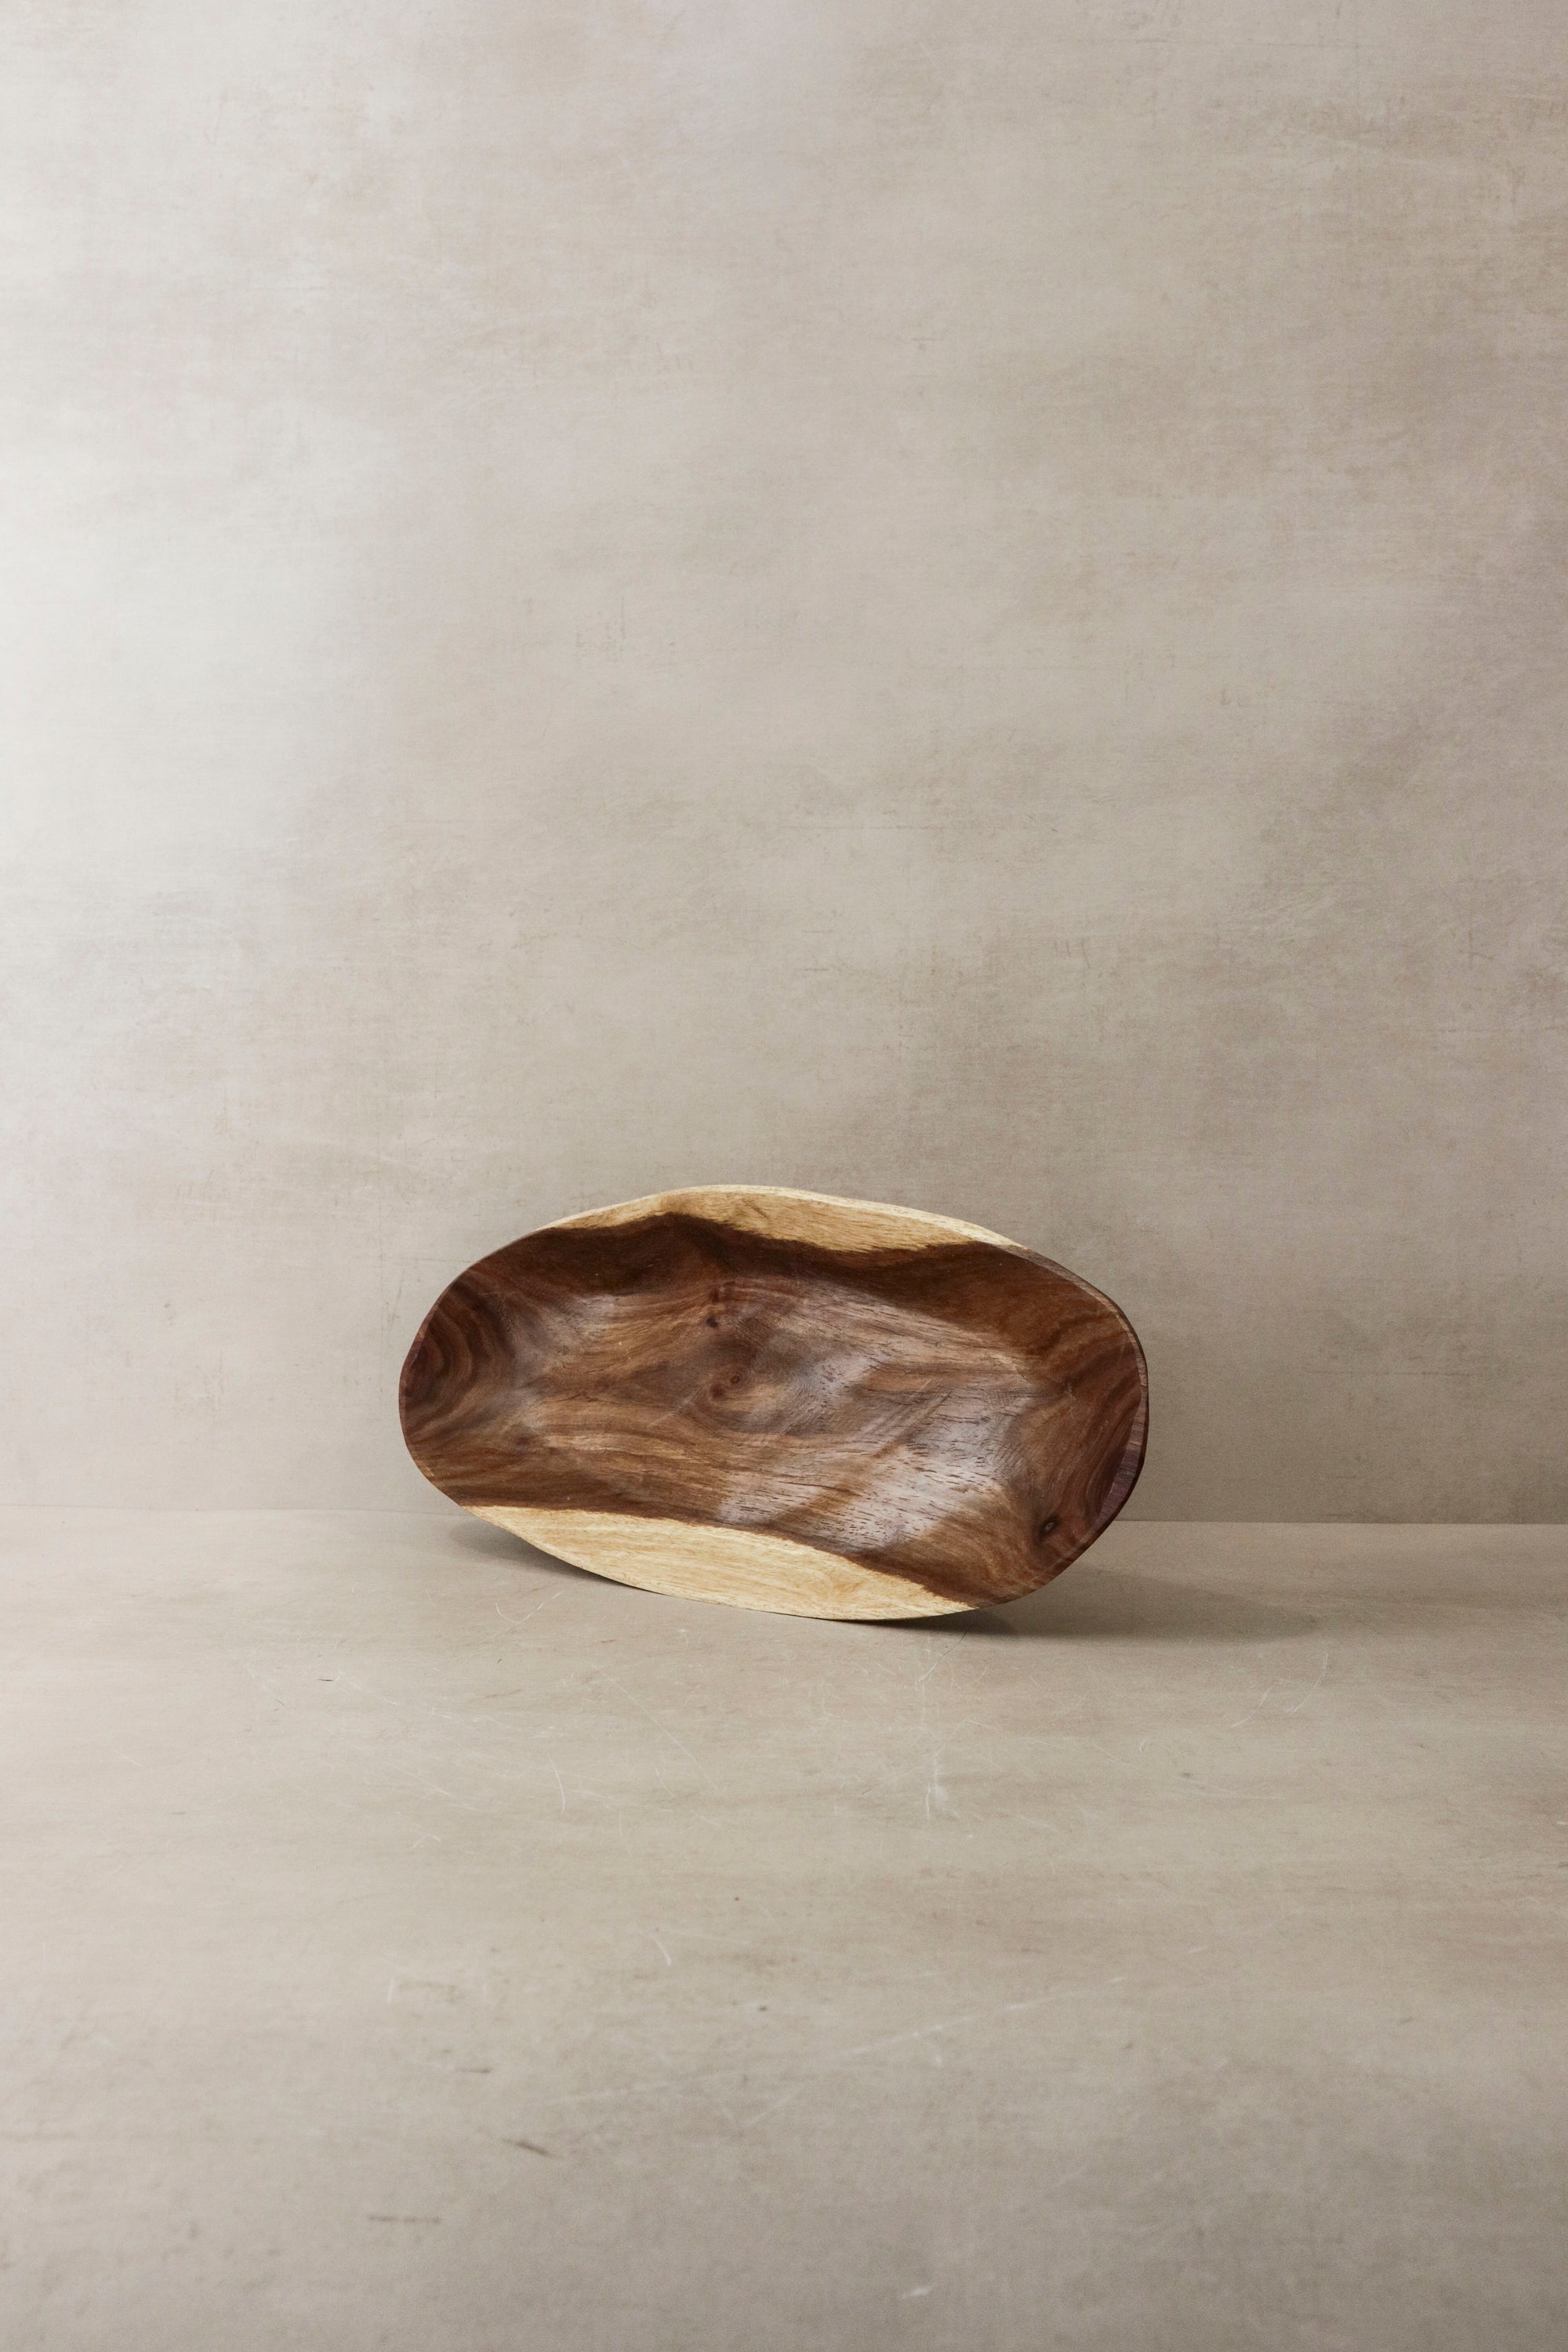 Handmade wooden bowl, Zimbabwe - 13.7